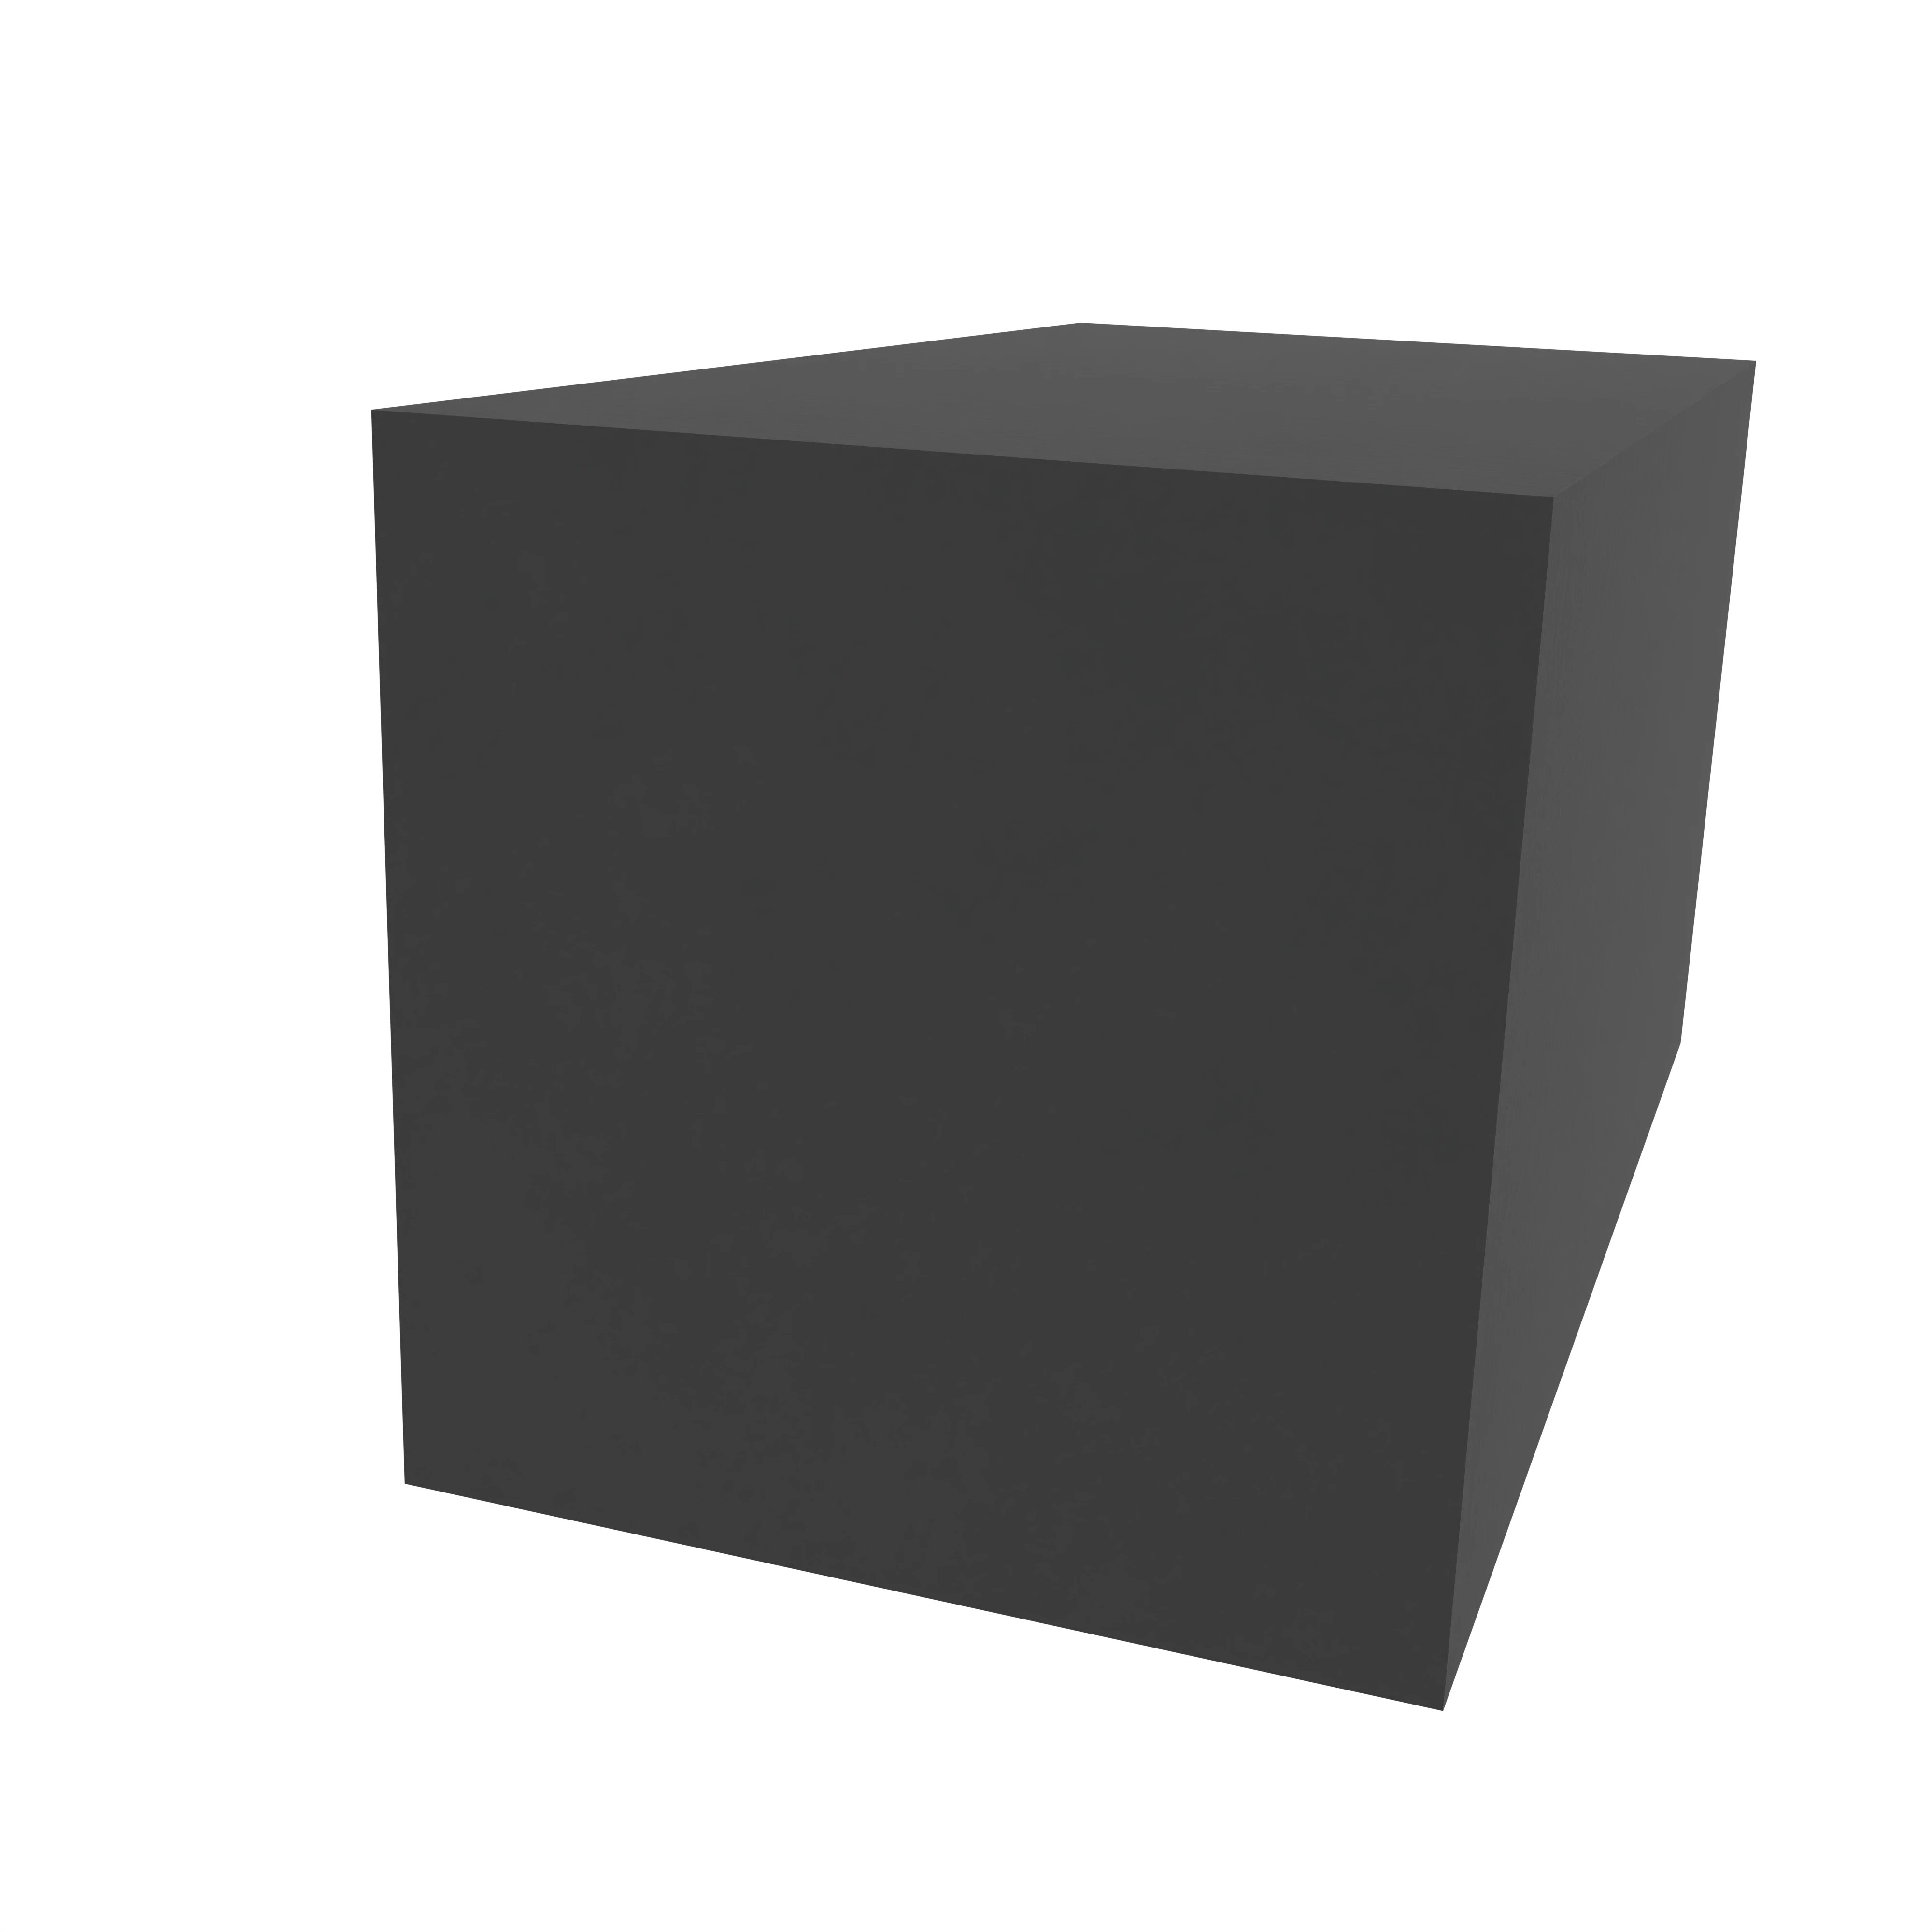 Moosgummidichtung vierkant | 20 mm Höhe | Farbe: schwarz